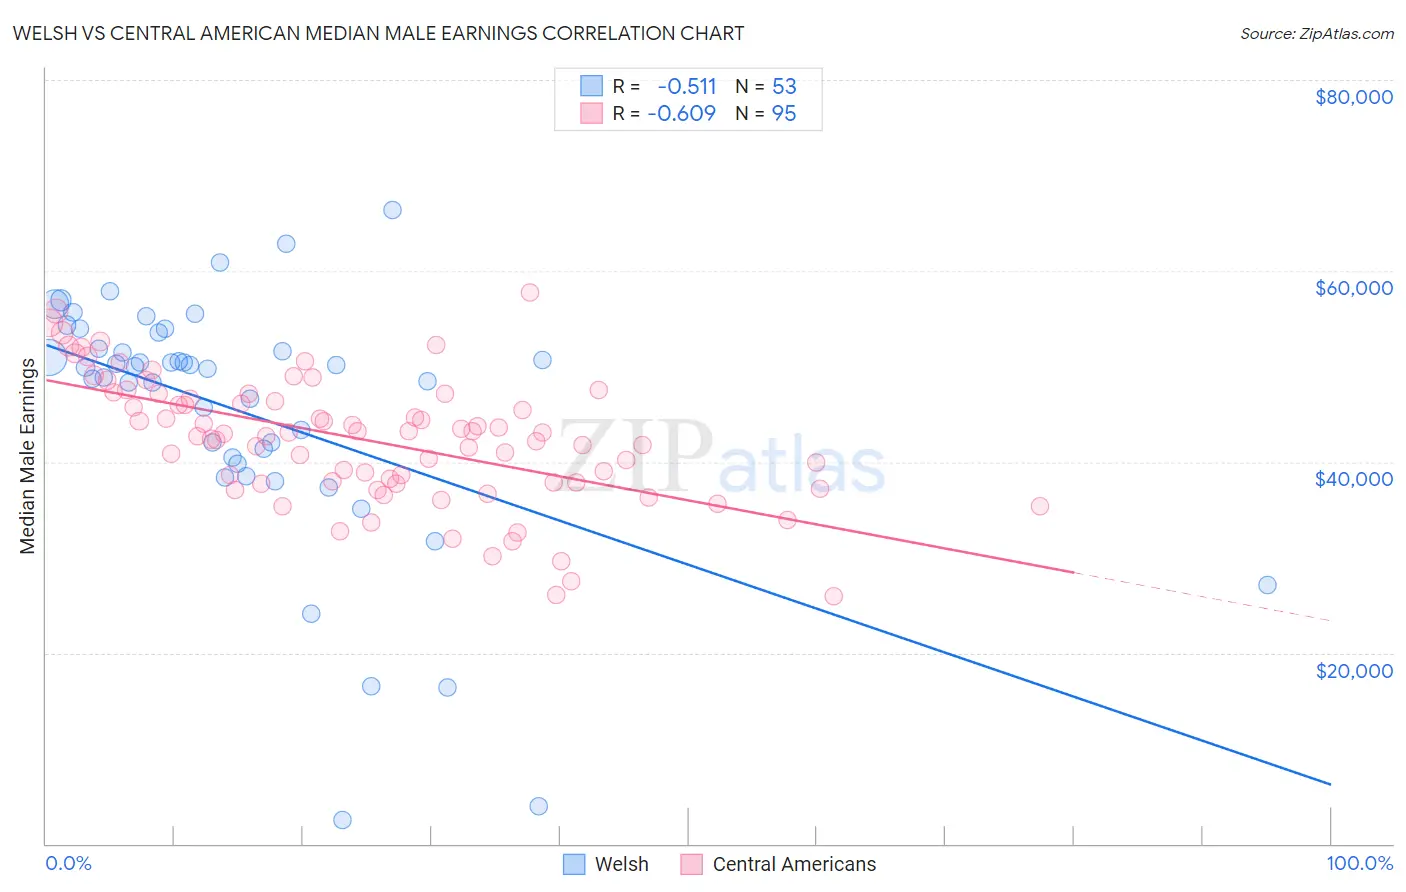 Welsh vs Central American Median Male Earnings